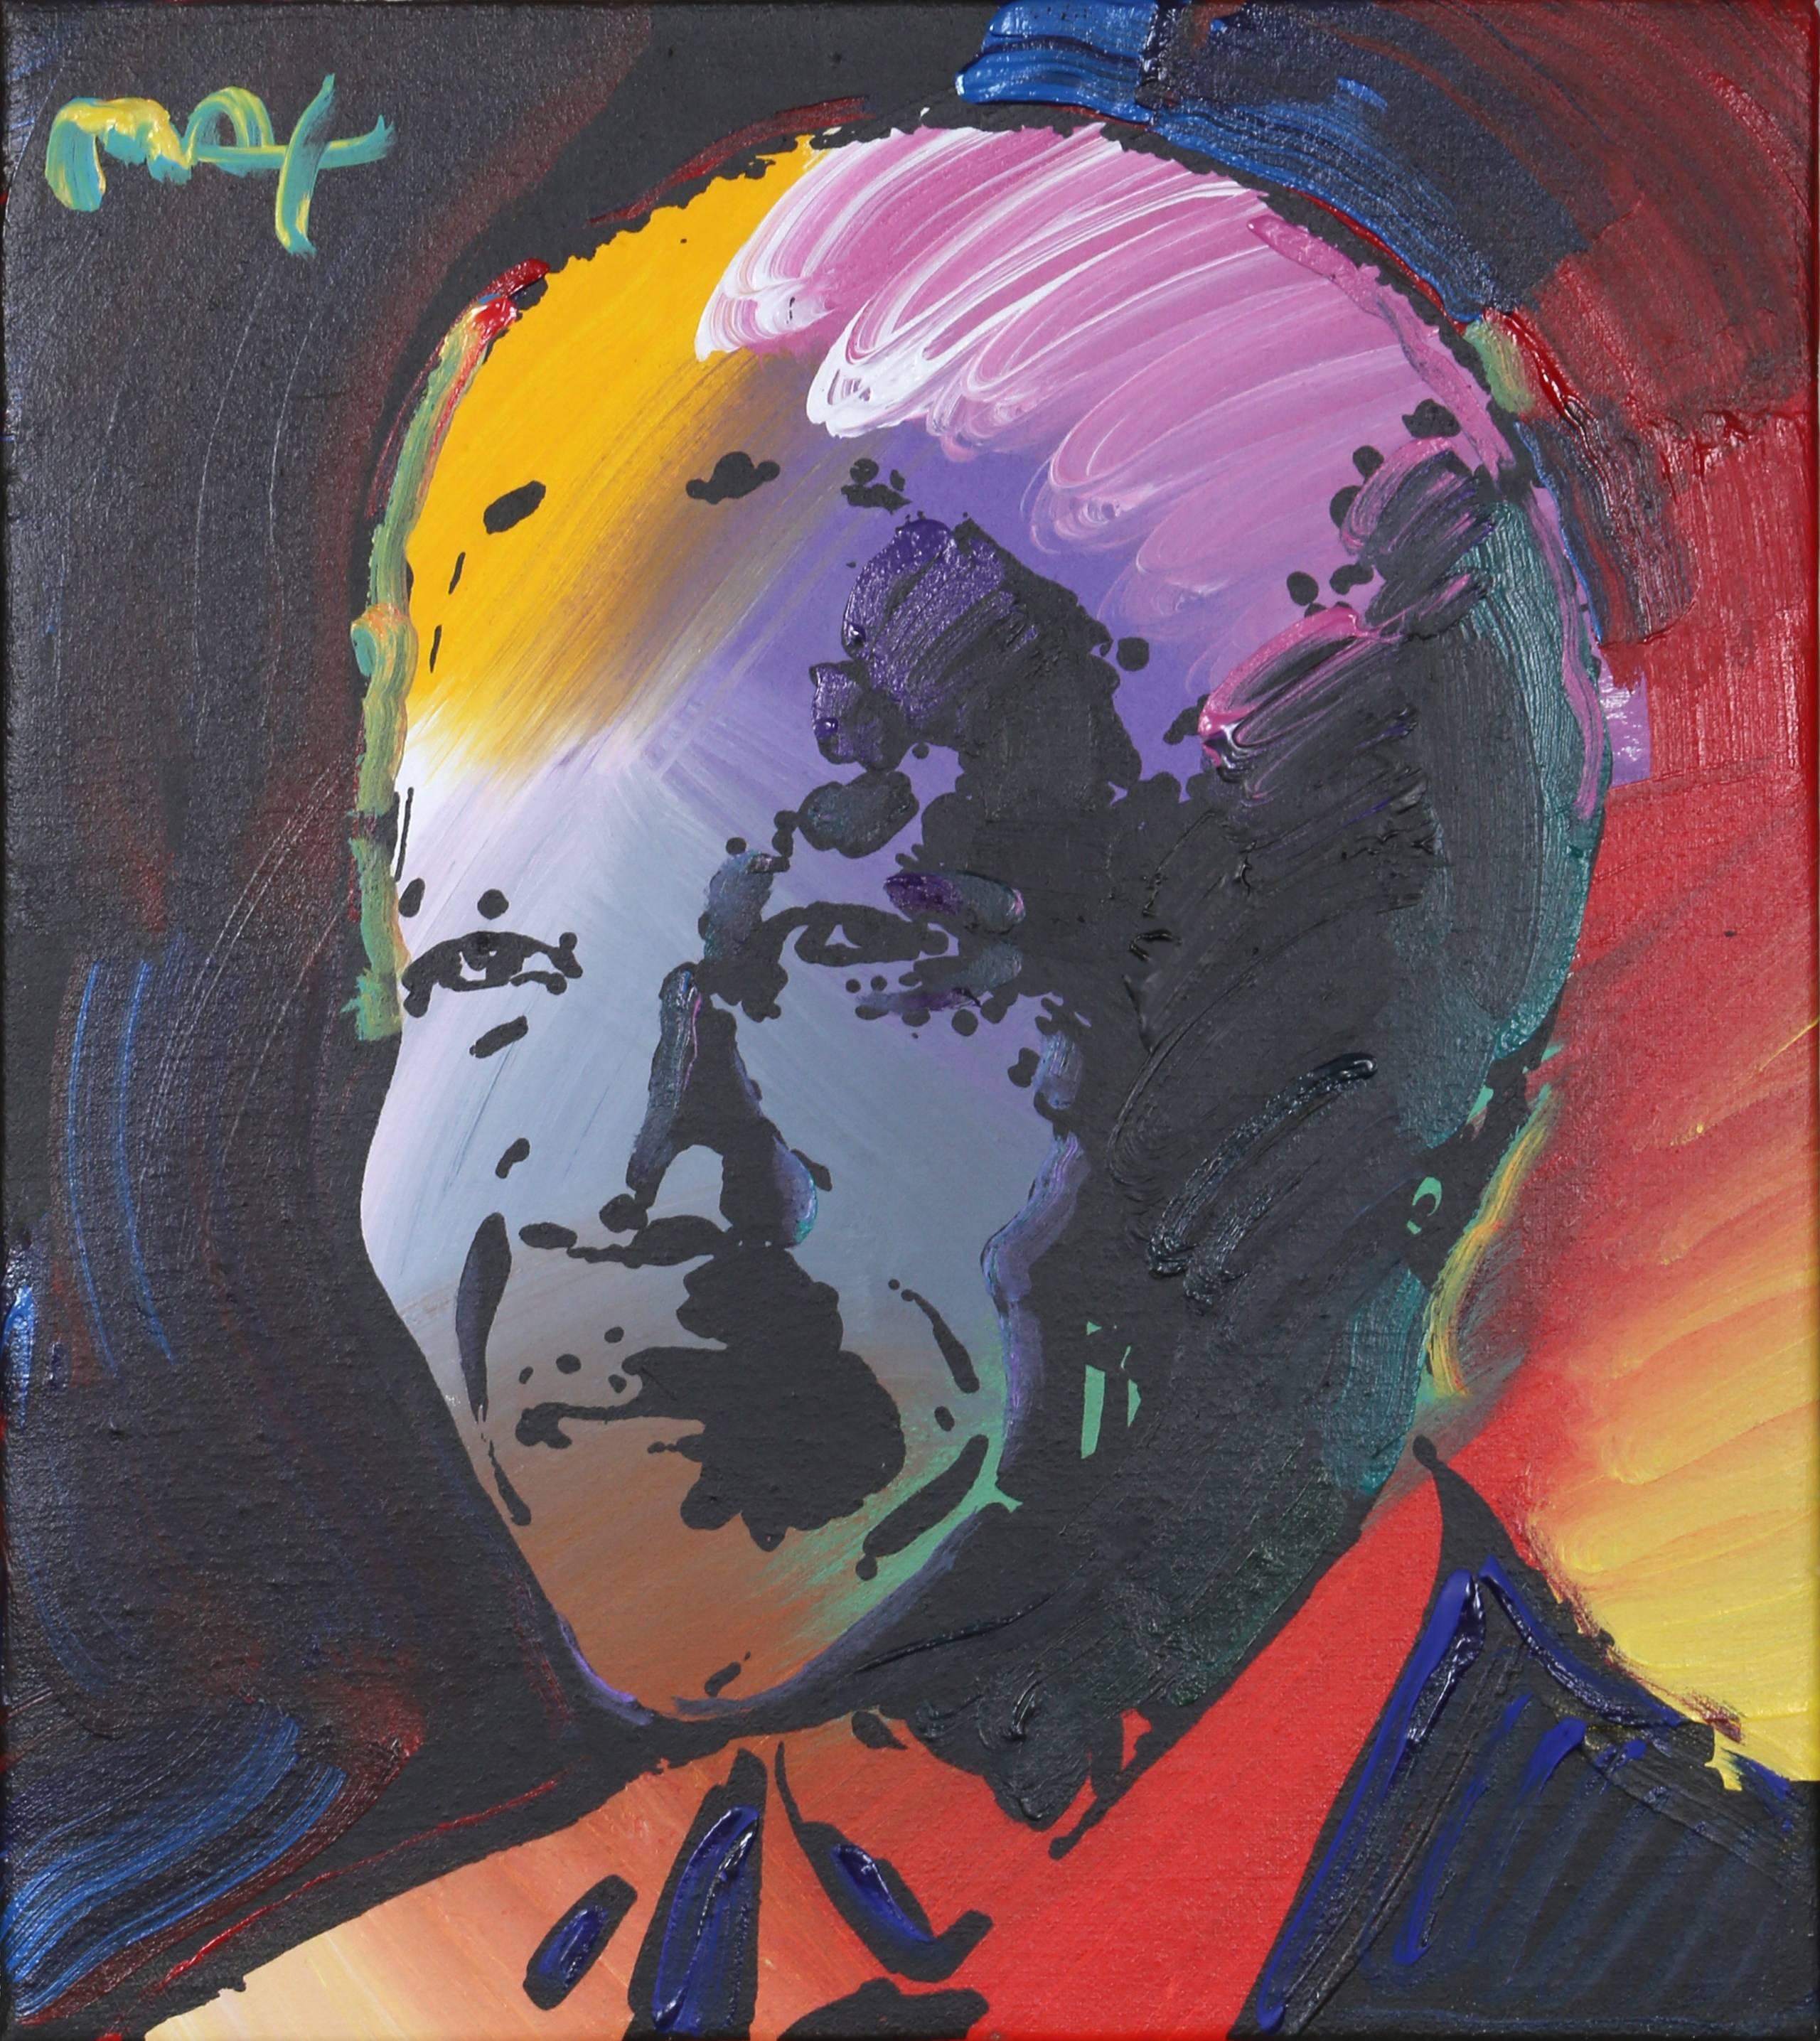 Nelson Mandela, Pop Art Portrait by Peter Max